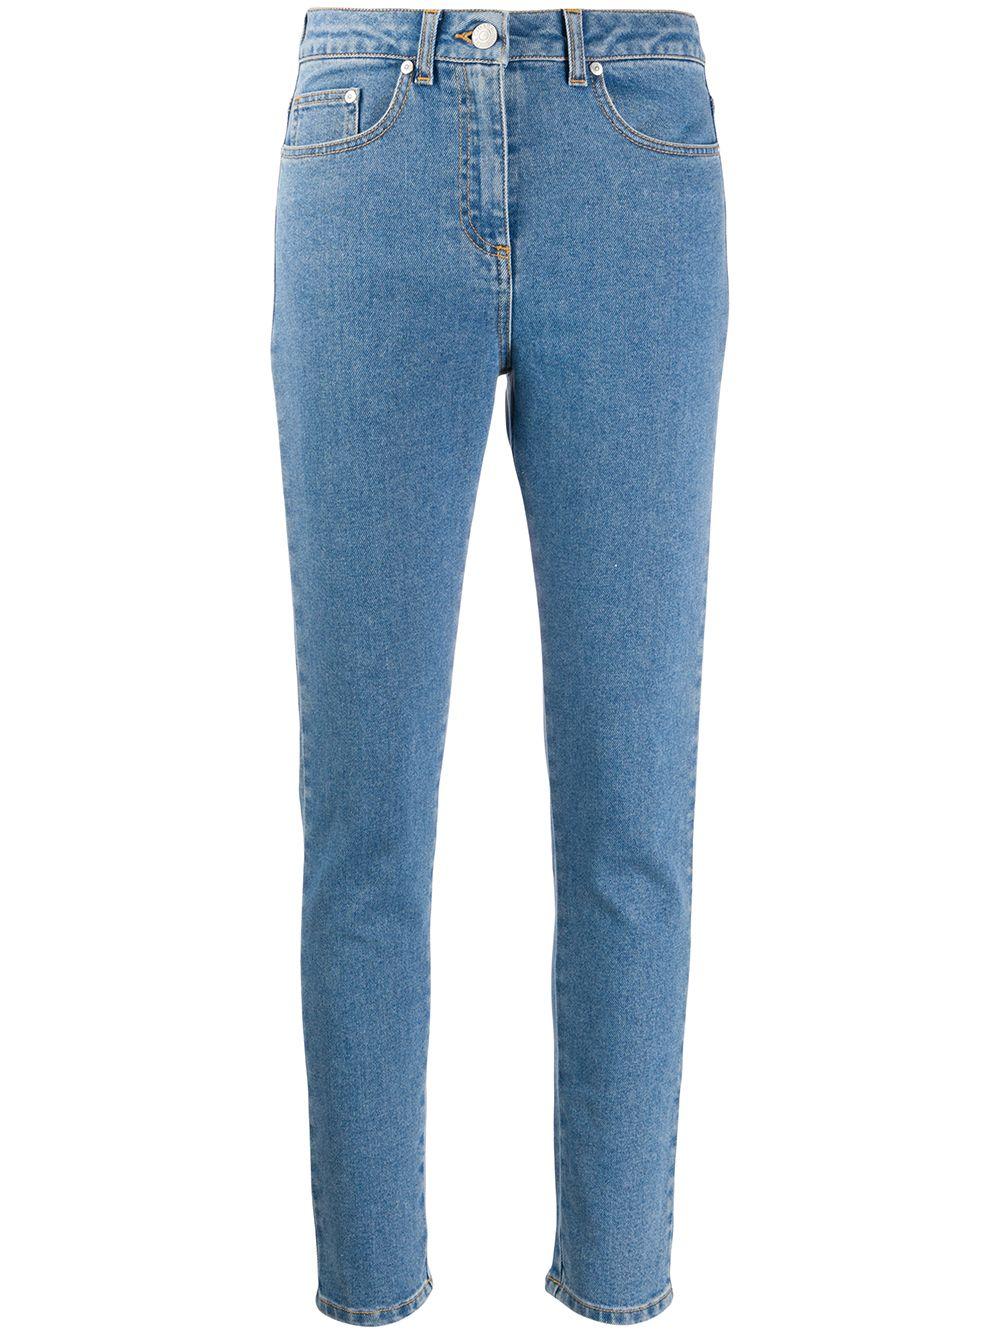 Chiara Ferragni Denim Flirting Skinny Jeans in Blue - Lyst